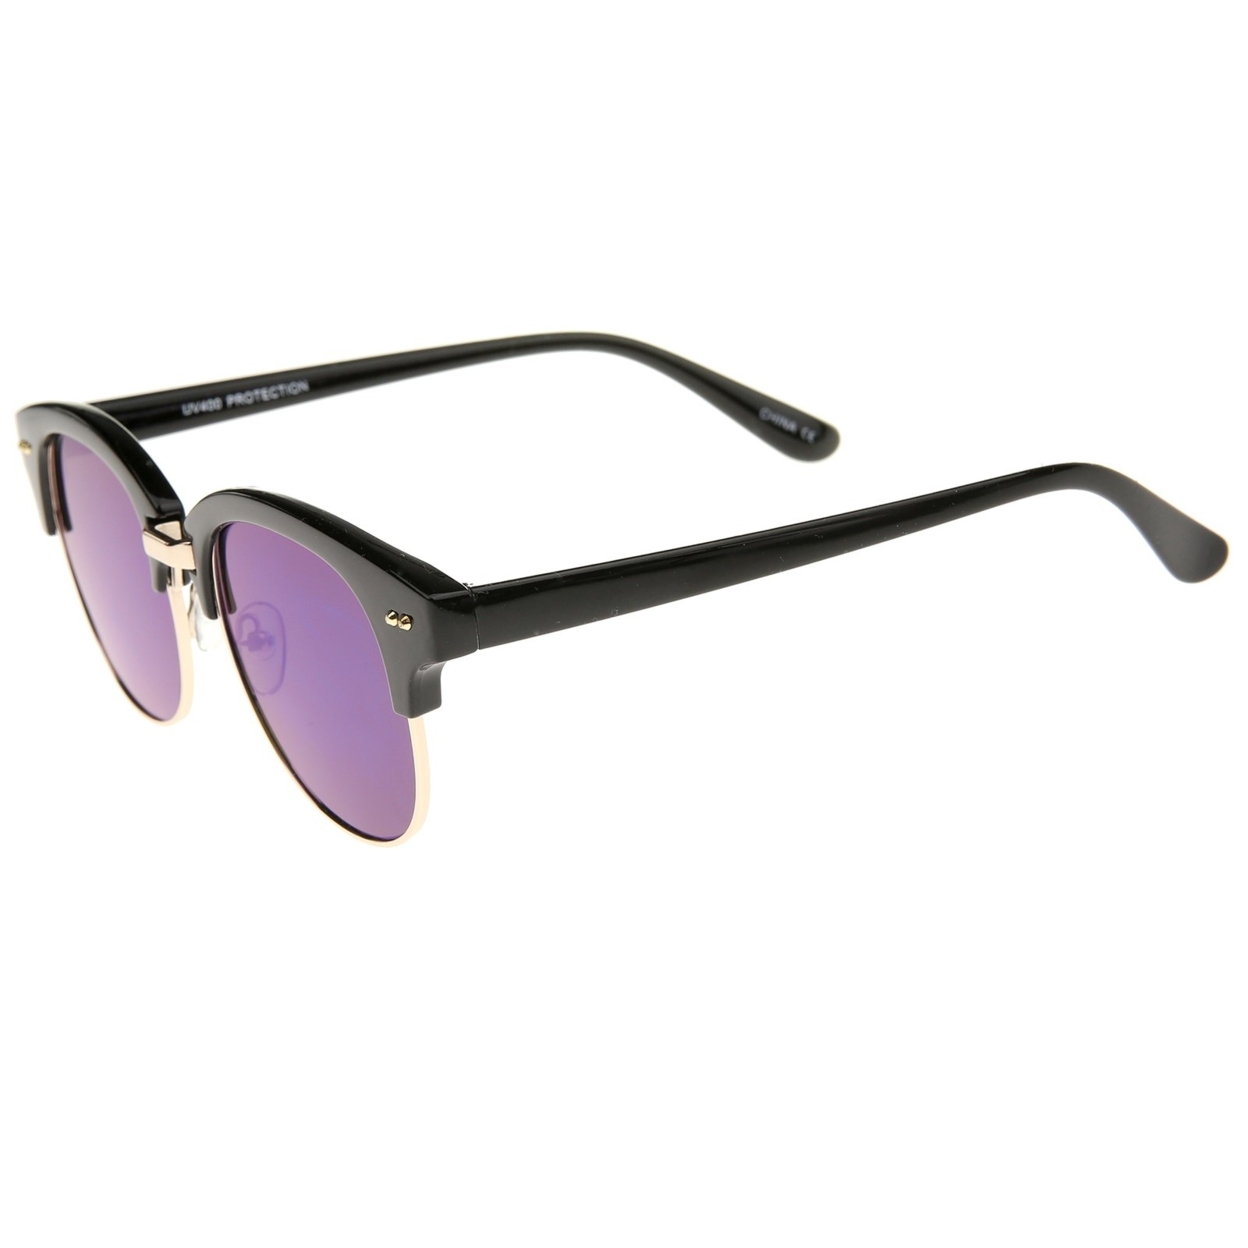 Bold Metal Nose Bridge Color Mirror Lens Round Half-Frame Sunglasses 52mm - Black-Gold / Magenta Mirror